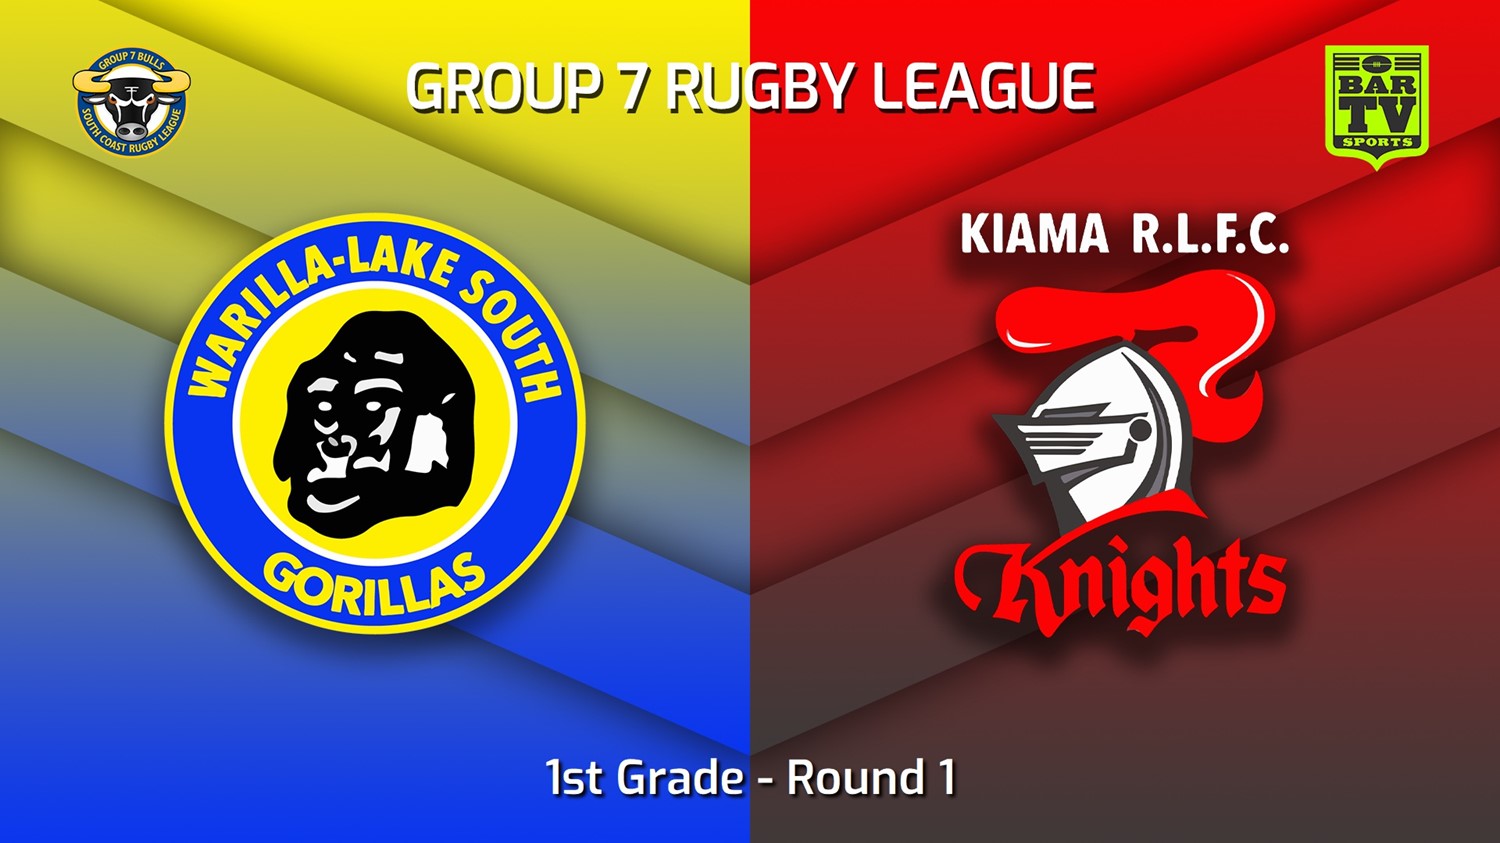 220731-South Coast Round 1 - 1st Grade - Warilla-Lake South Gorillas v Kiama Knights Minigame Slate Image